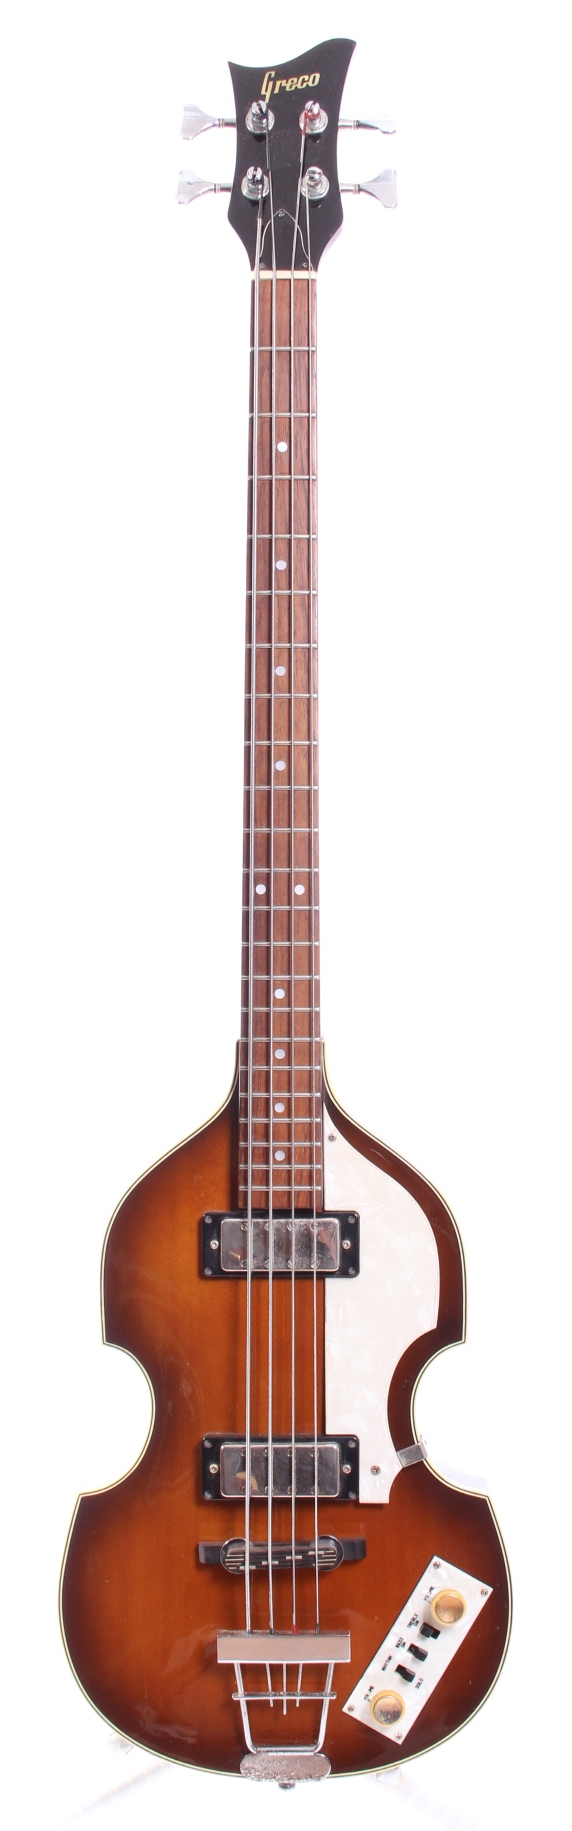 Greco Violin Bass VB 650 1990 Sunburst Bass For Sale Yeahman's Guitars